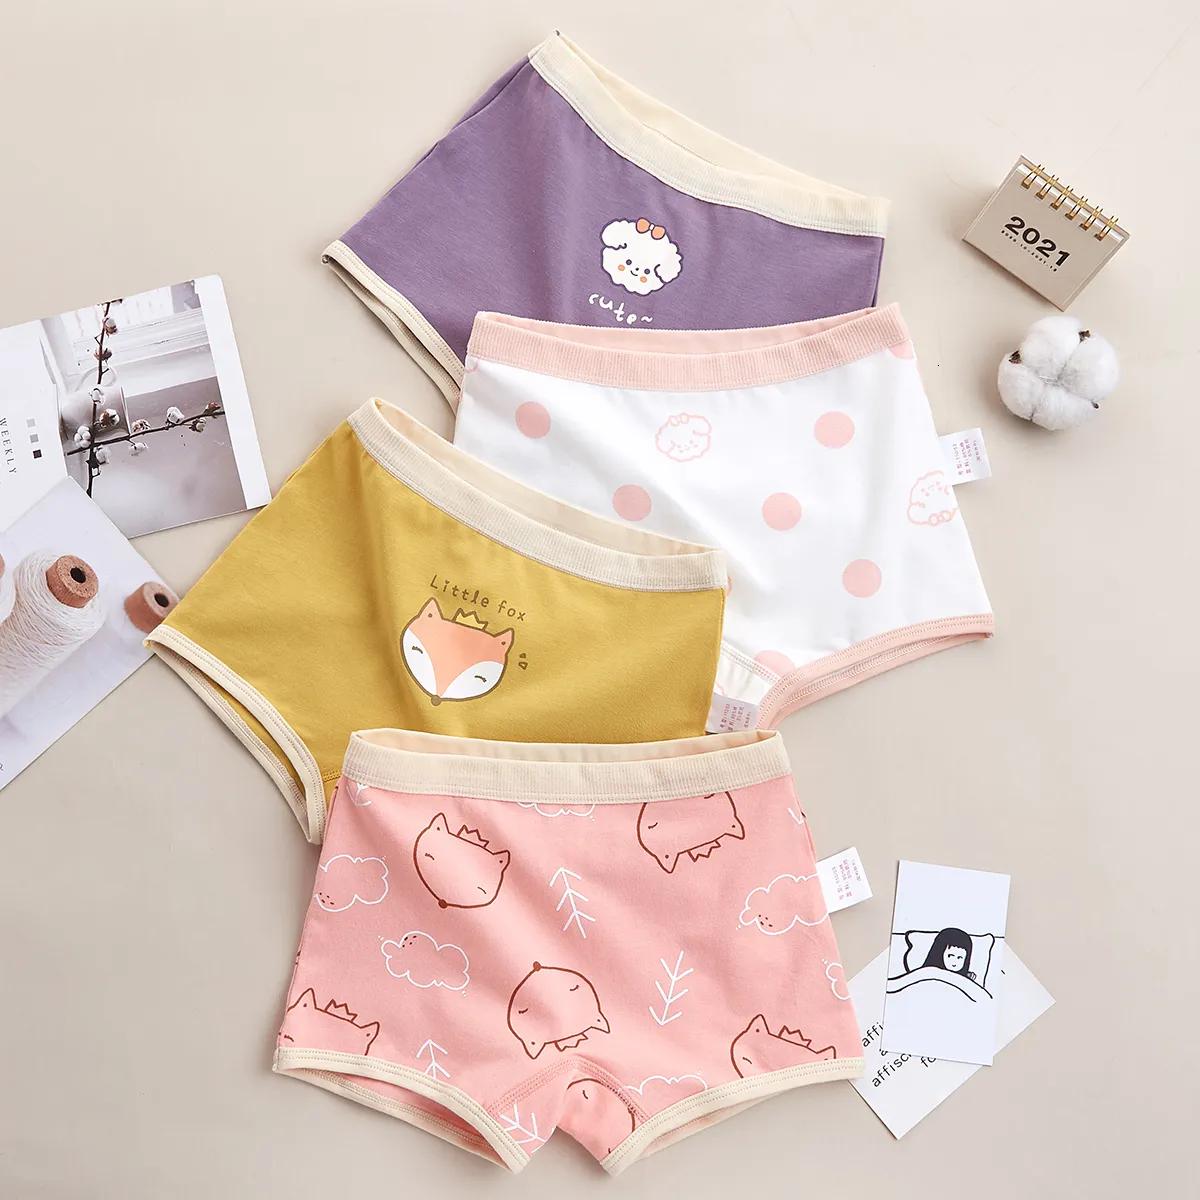 Cute Cartoon Polka Dot Cotton Toddler Underwear For Girls Sizes 6 12 212044  From Deng08, $10.24